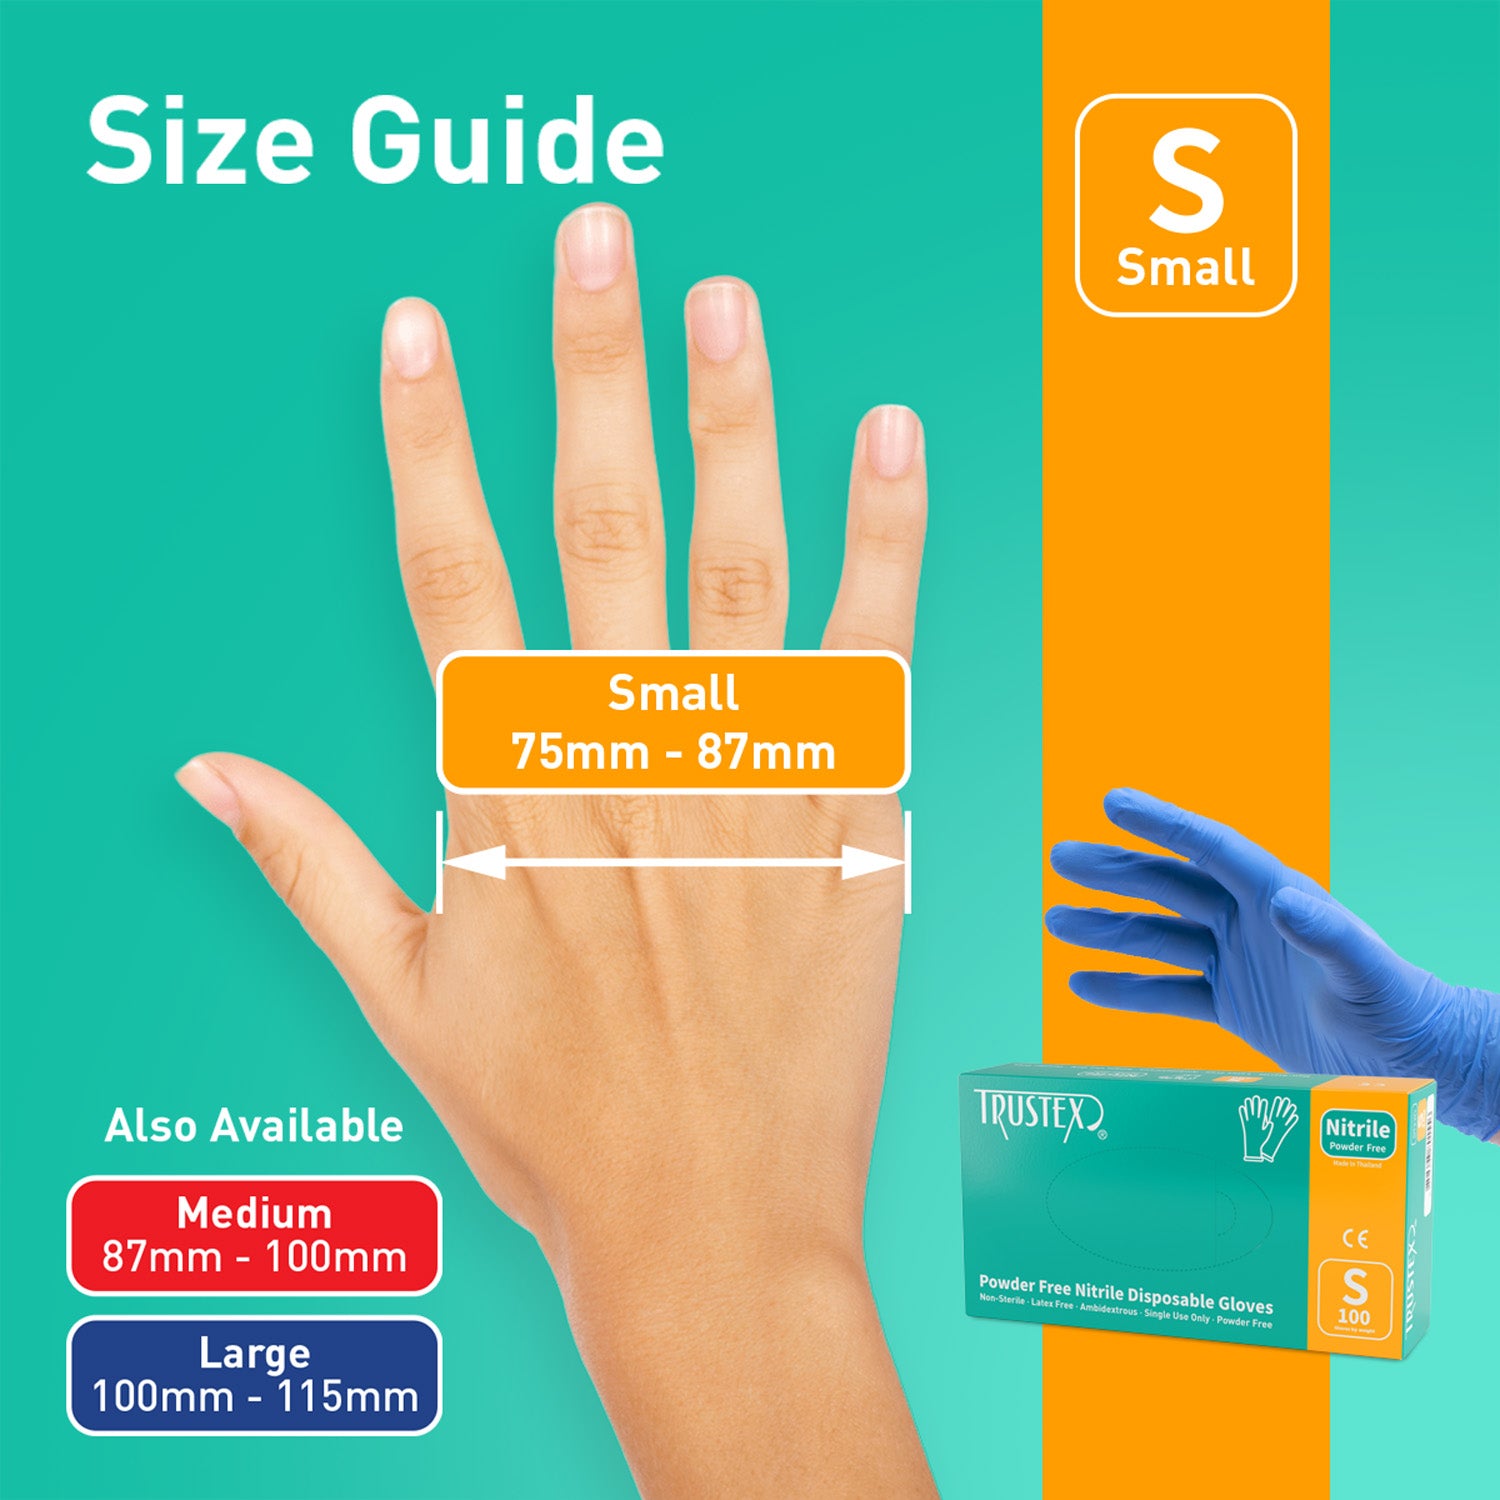 Trustex Nitrile Disposable Gloves | Powder Free | Box of 100 | Size Small